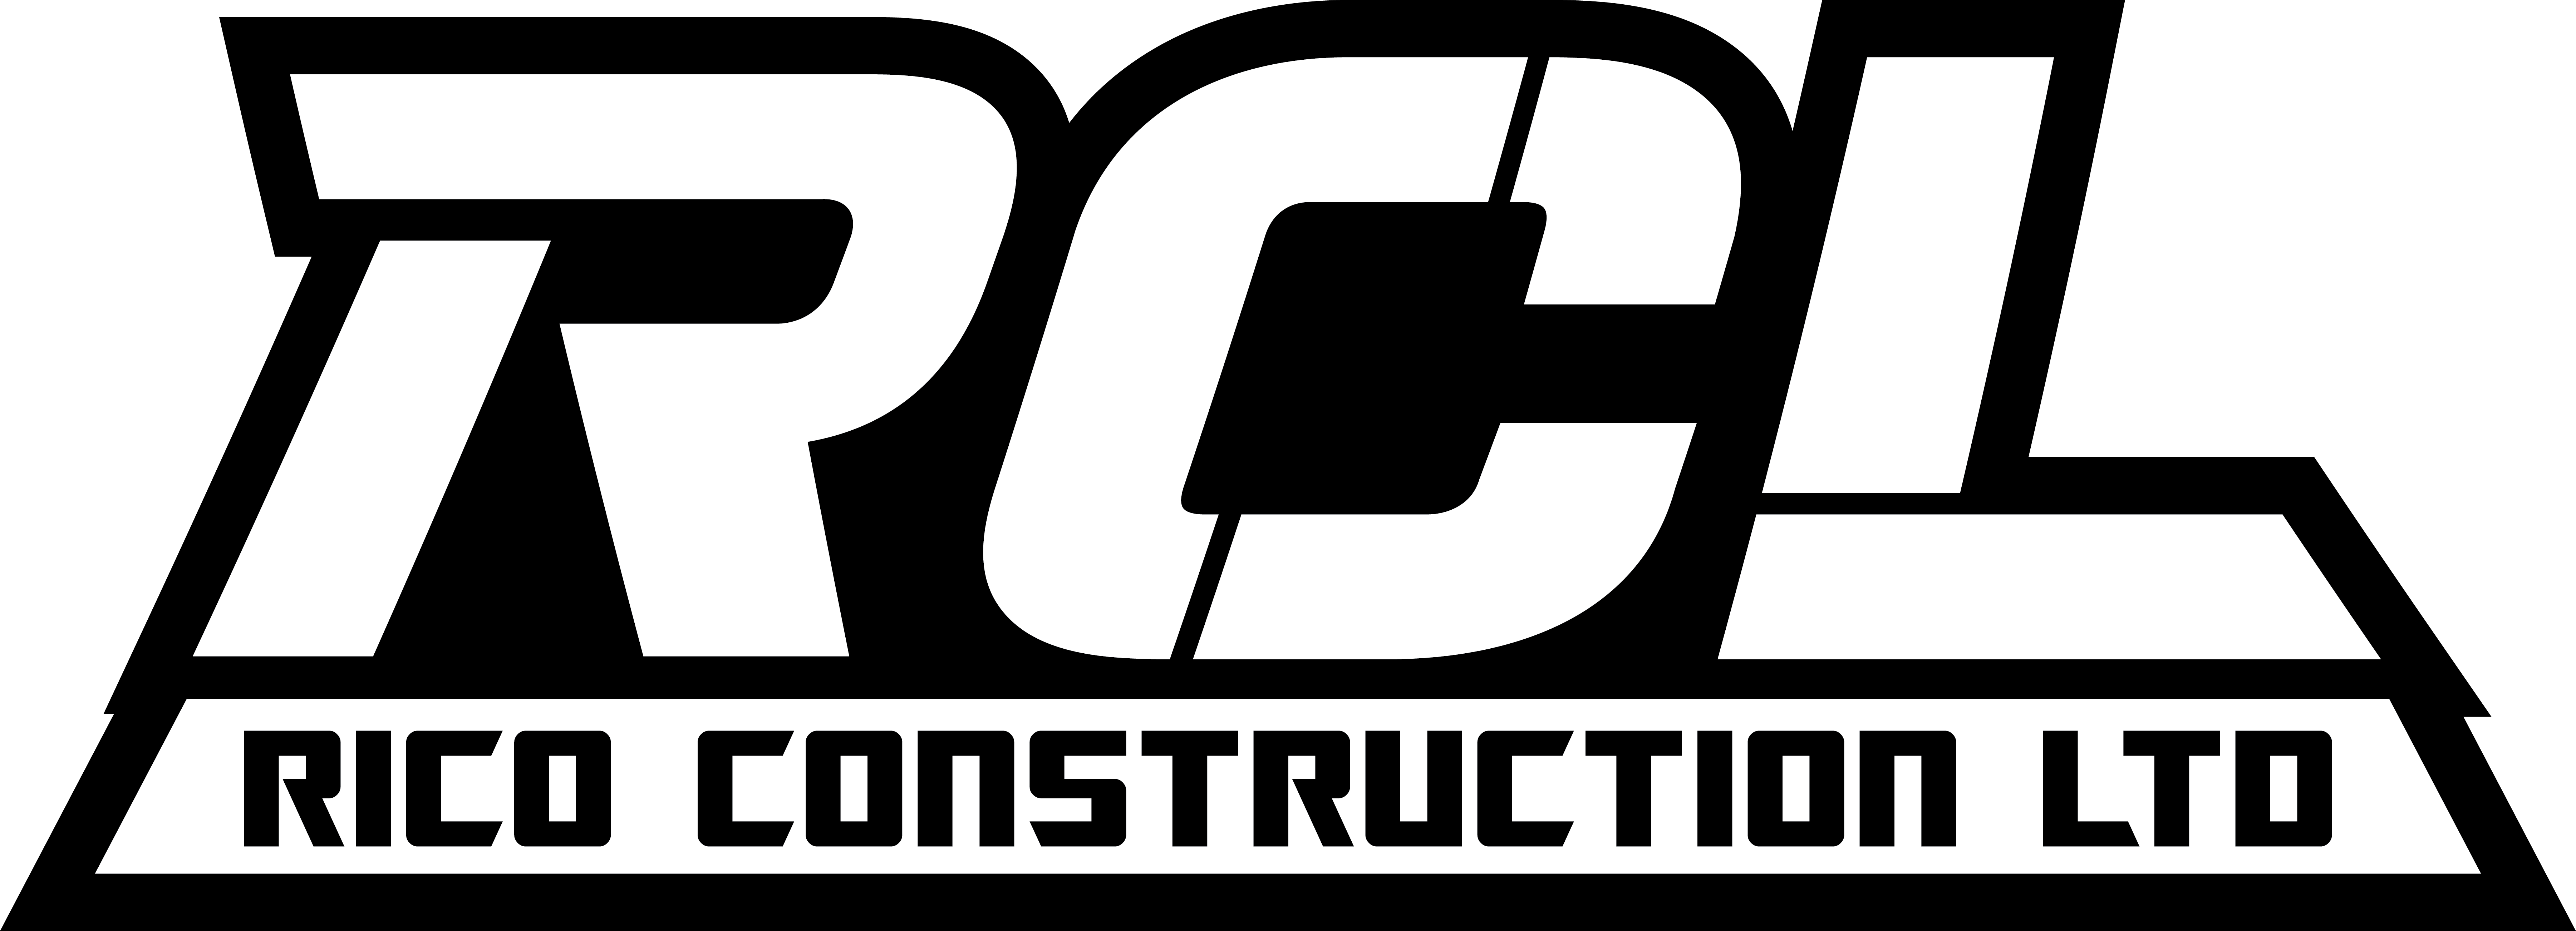 Rico Construction